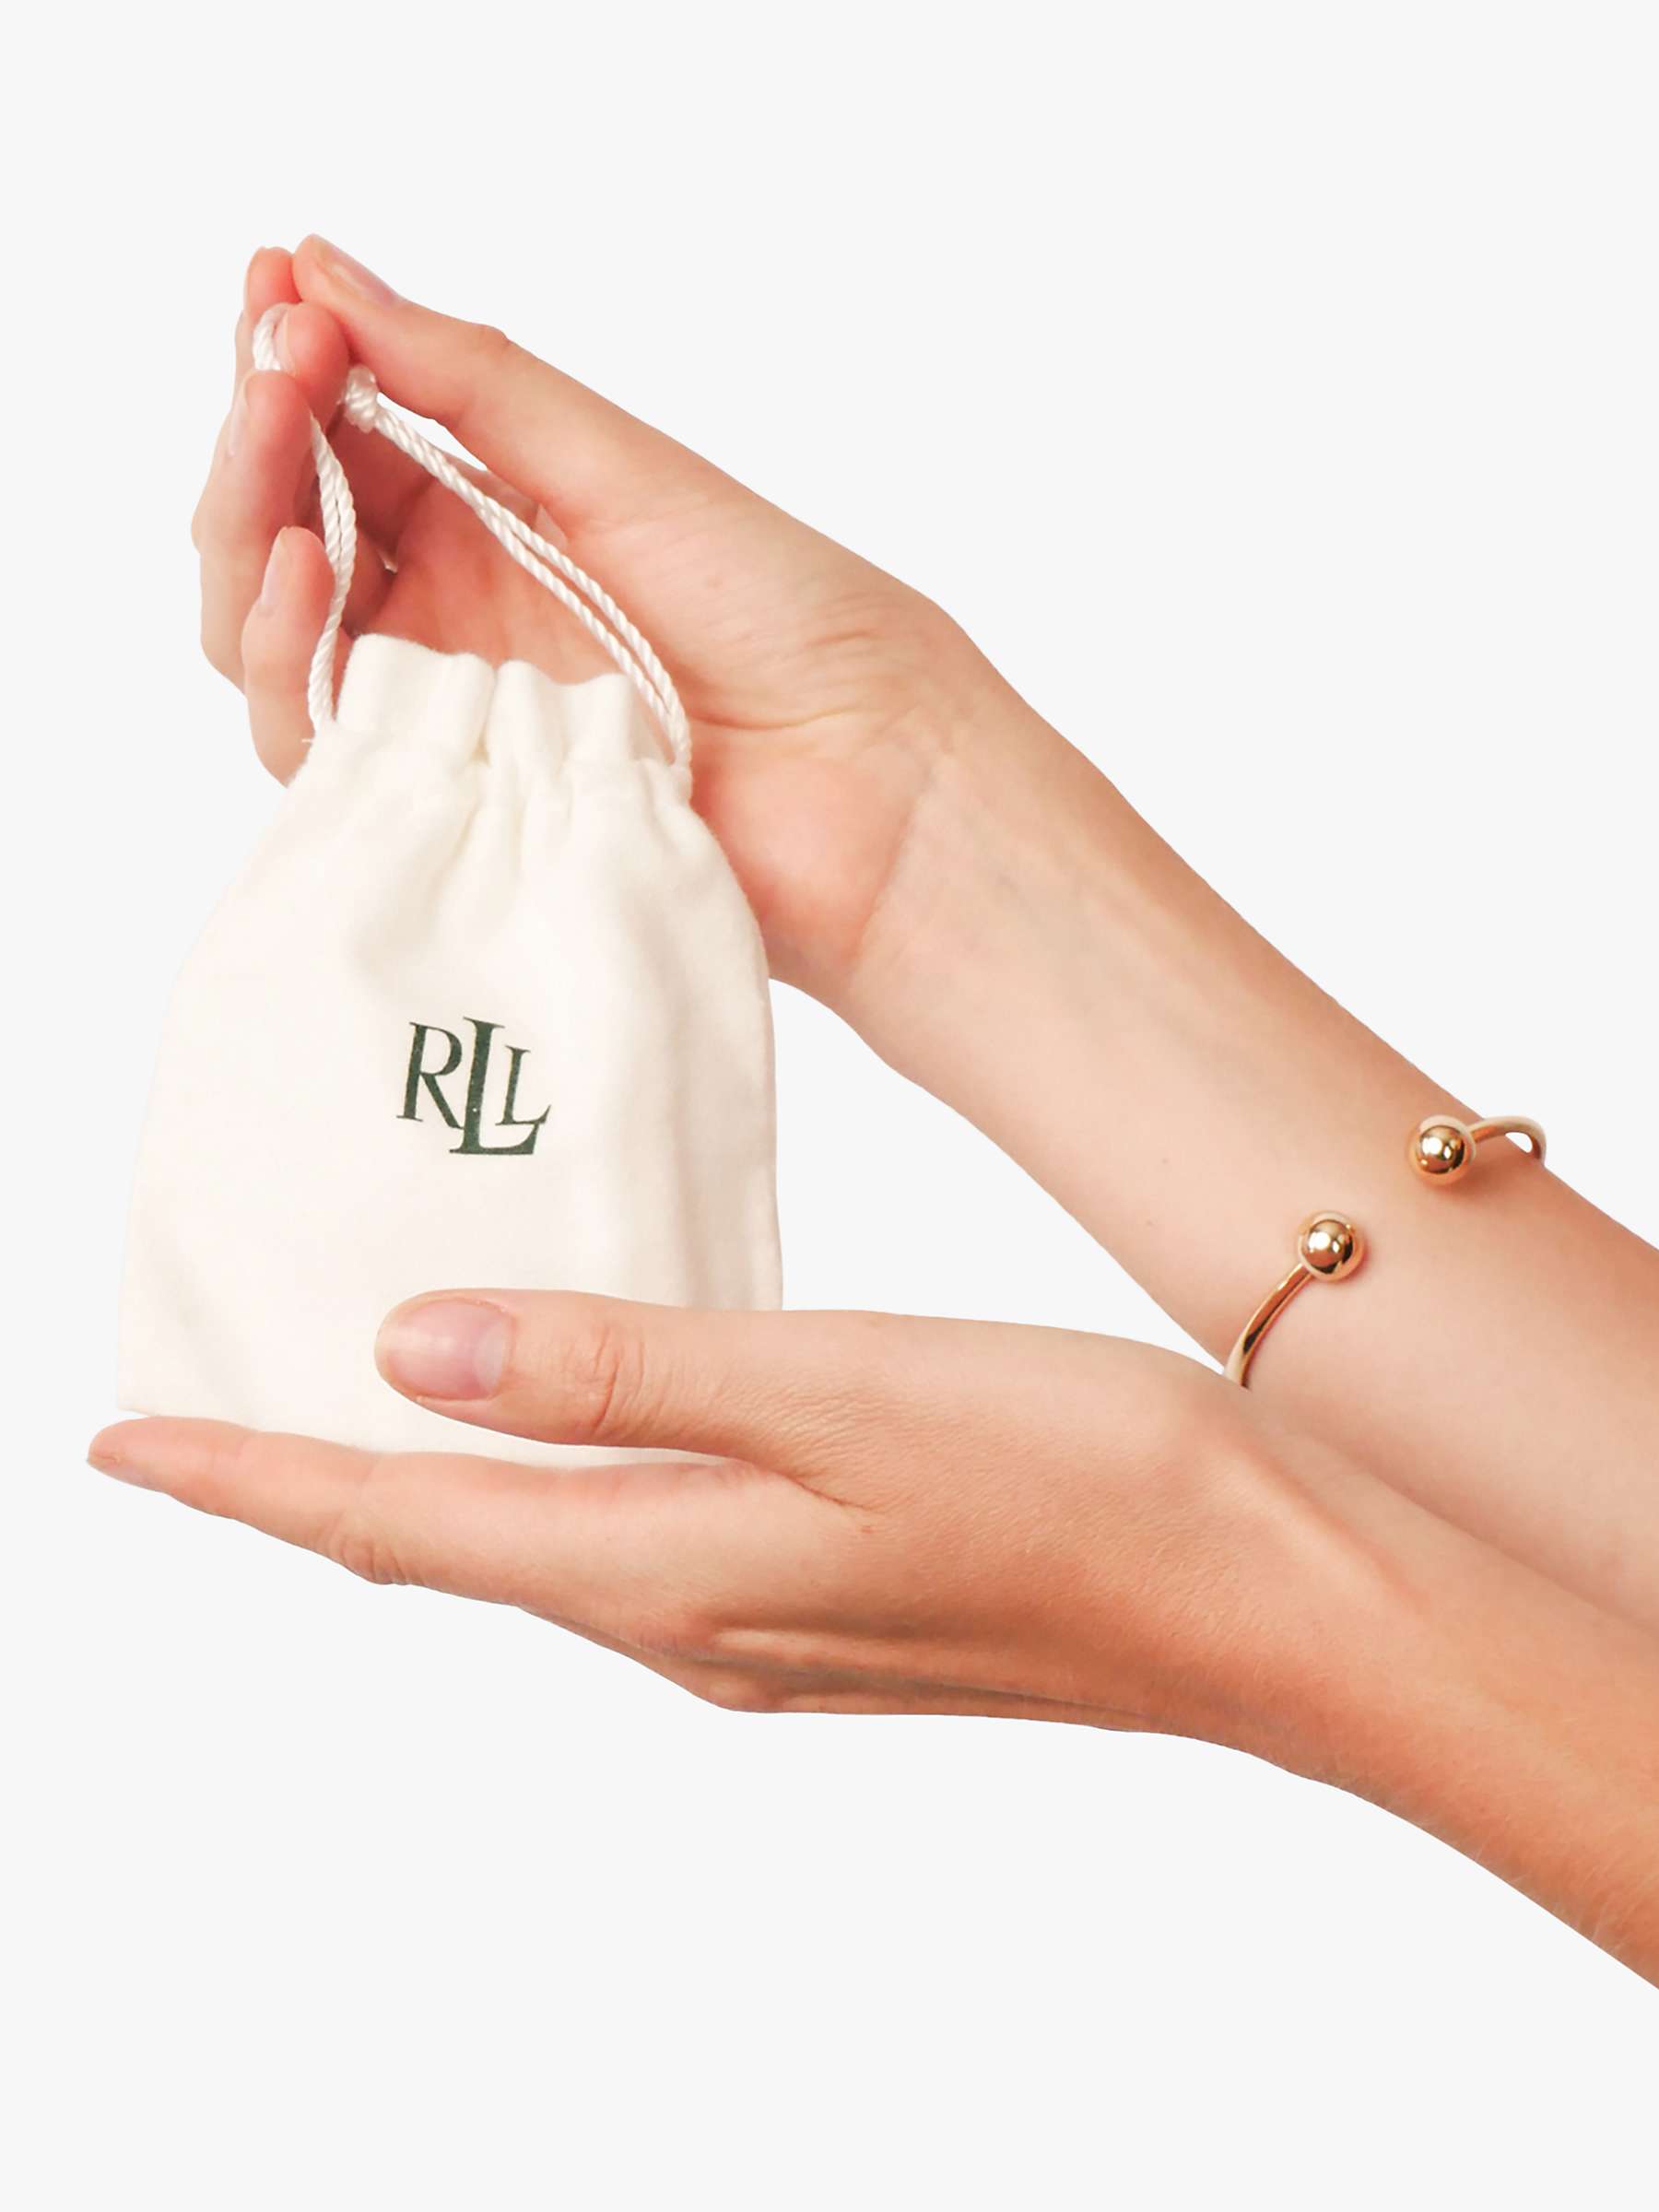 Buy Lauren Ralph Lauren Faux Pearl Stud Earrings, White/Silver Online at johnlewis.com